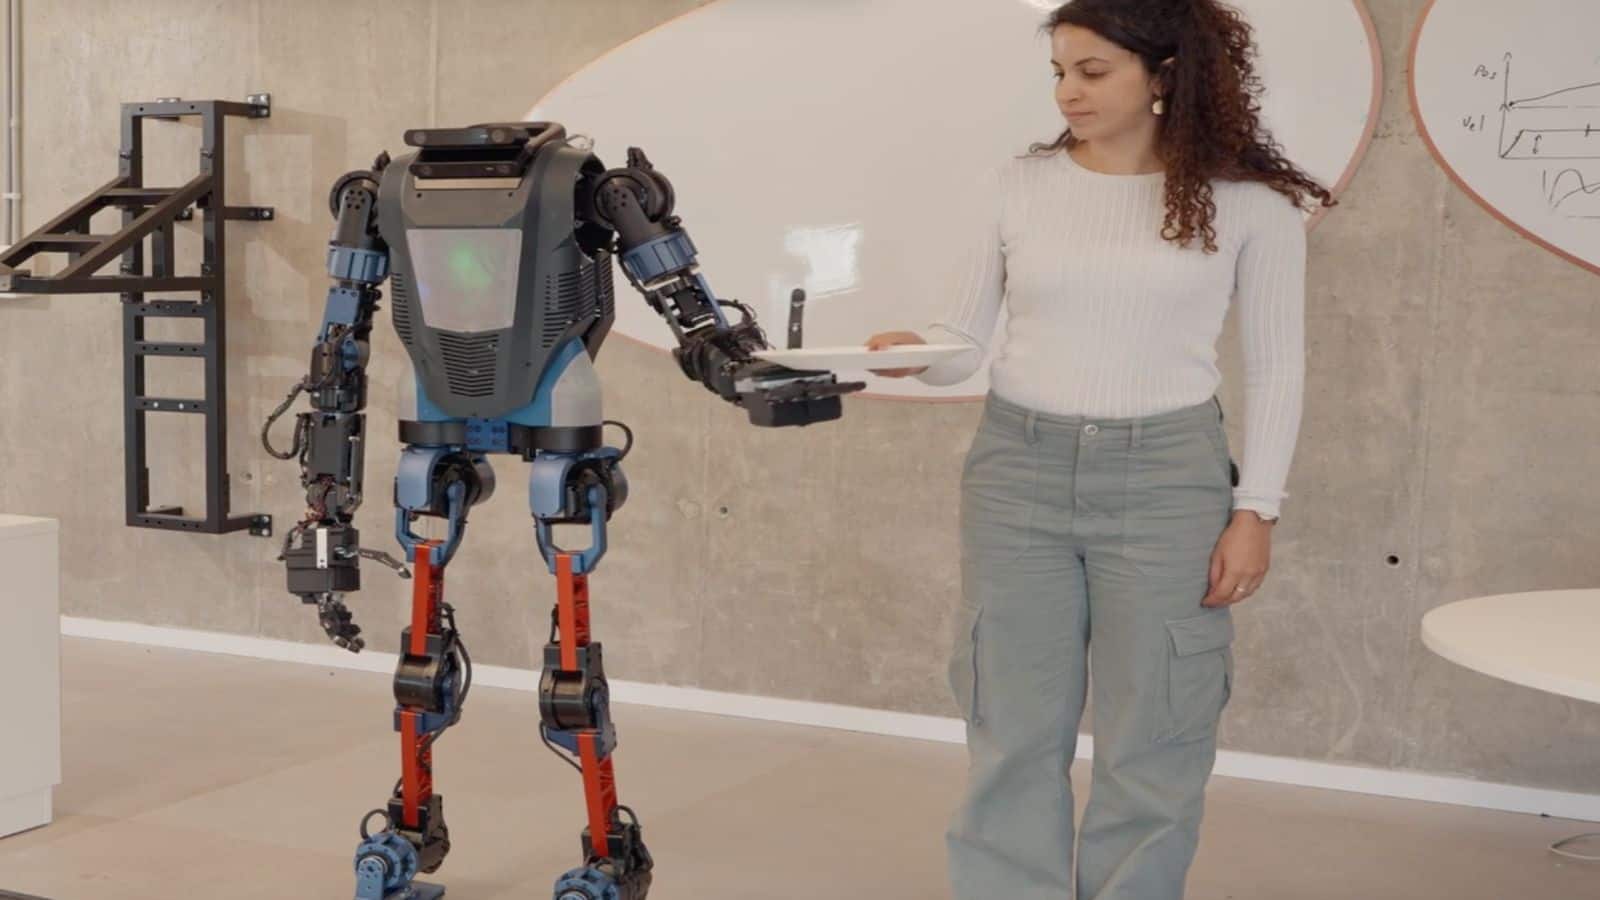 Meet Menteebot, a human-sized AI robot you can mentor